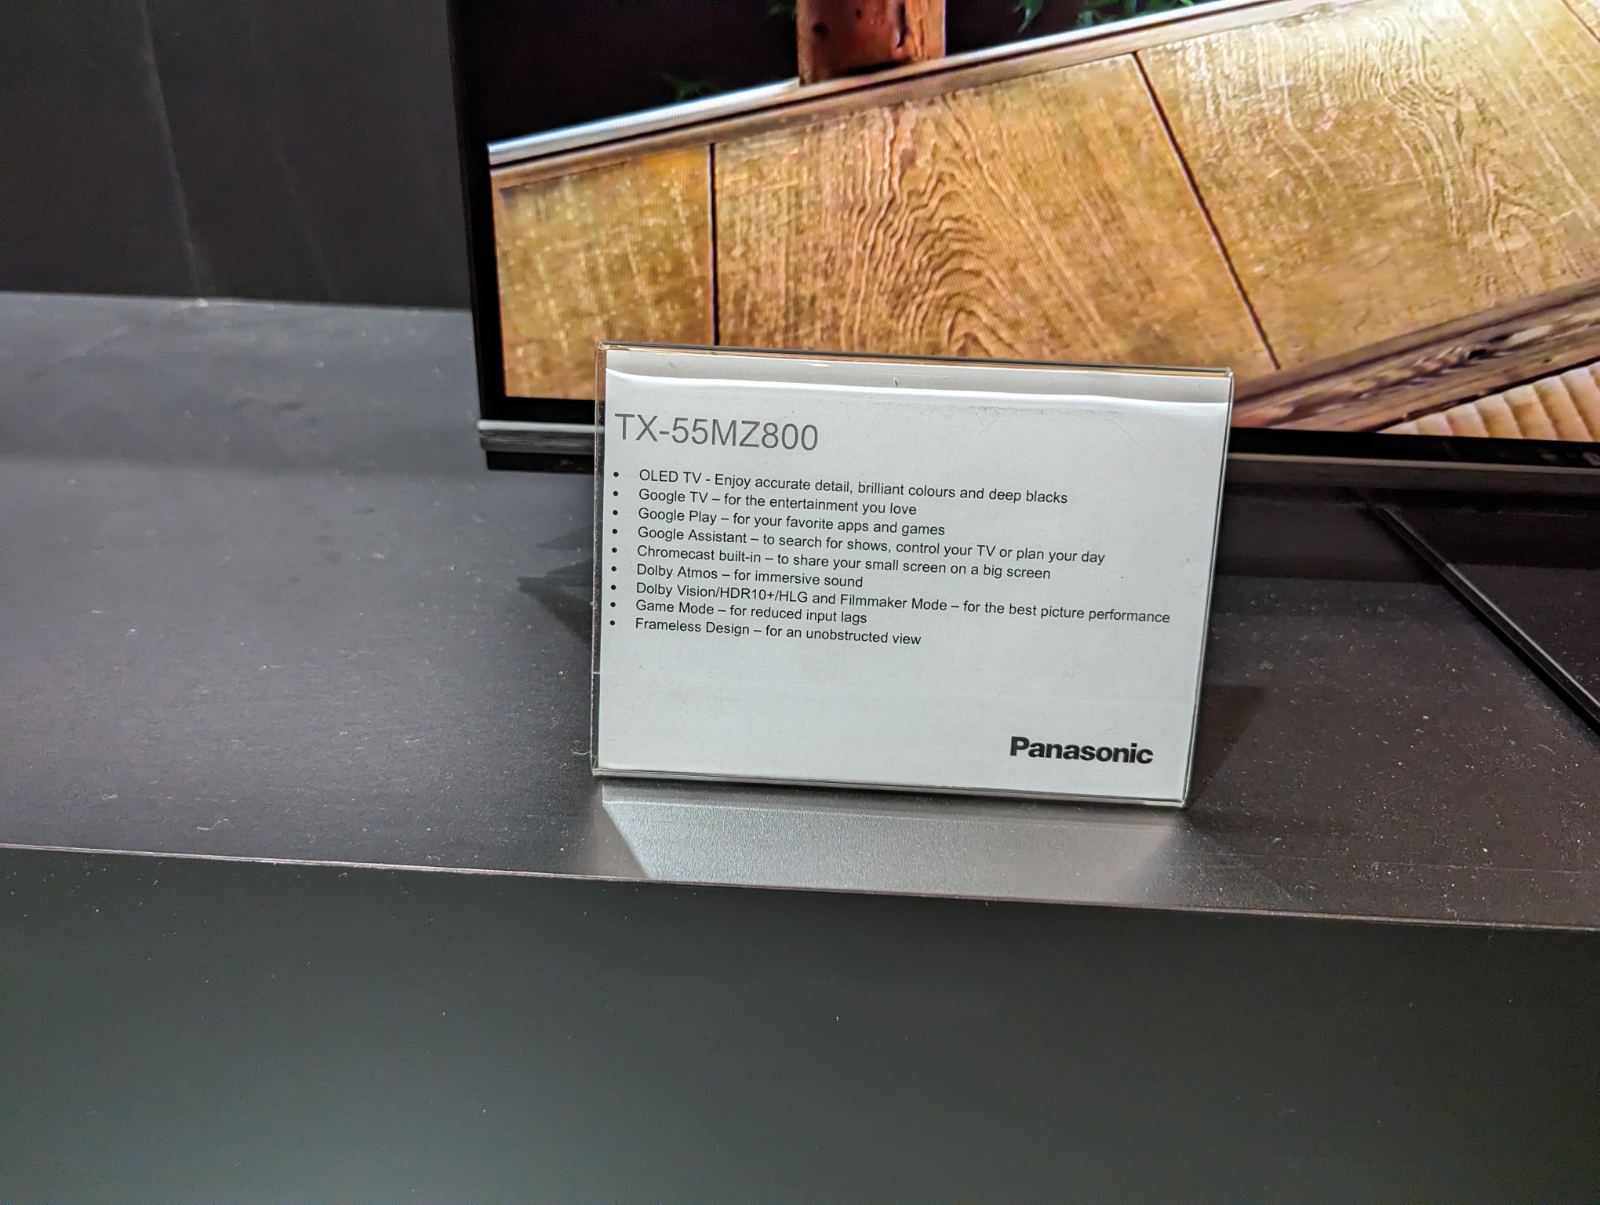 Panasonic MZ800 opinie recenzja test (1).jpg